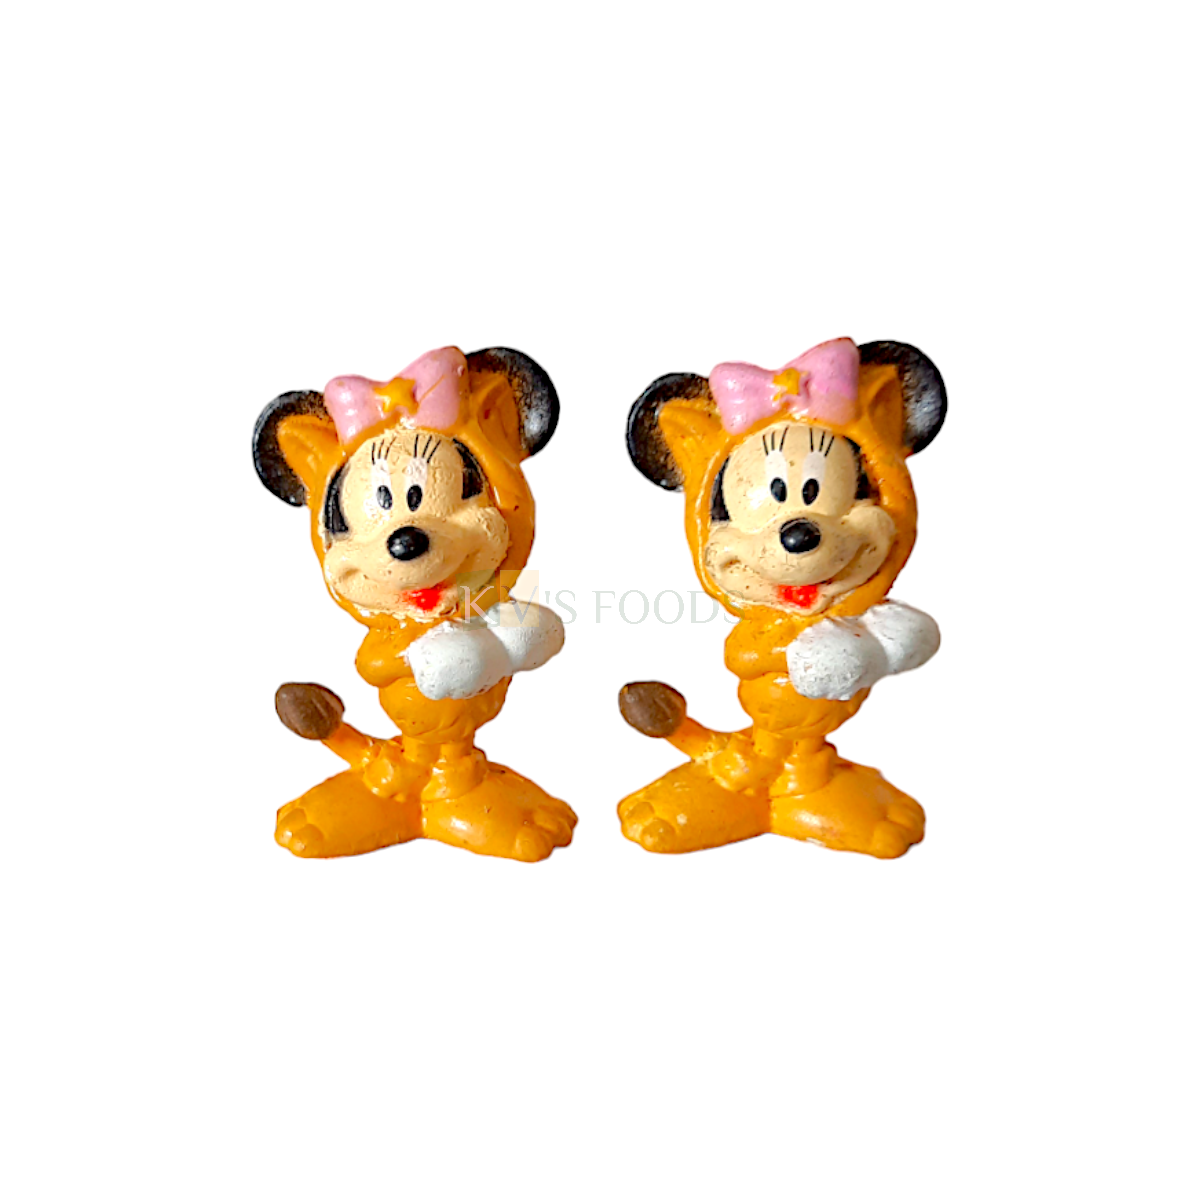 2PC Disney Little Mini Mouse Toys Cartoon Anime Figurine Cake Topper Kawaii Q Style Cartoon Theme, Miniature Doll, Kids Room Decor, Cartoon Characters Girls Happy Birthday Theme DIY Cake Decorations